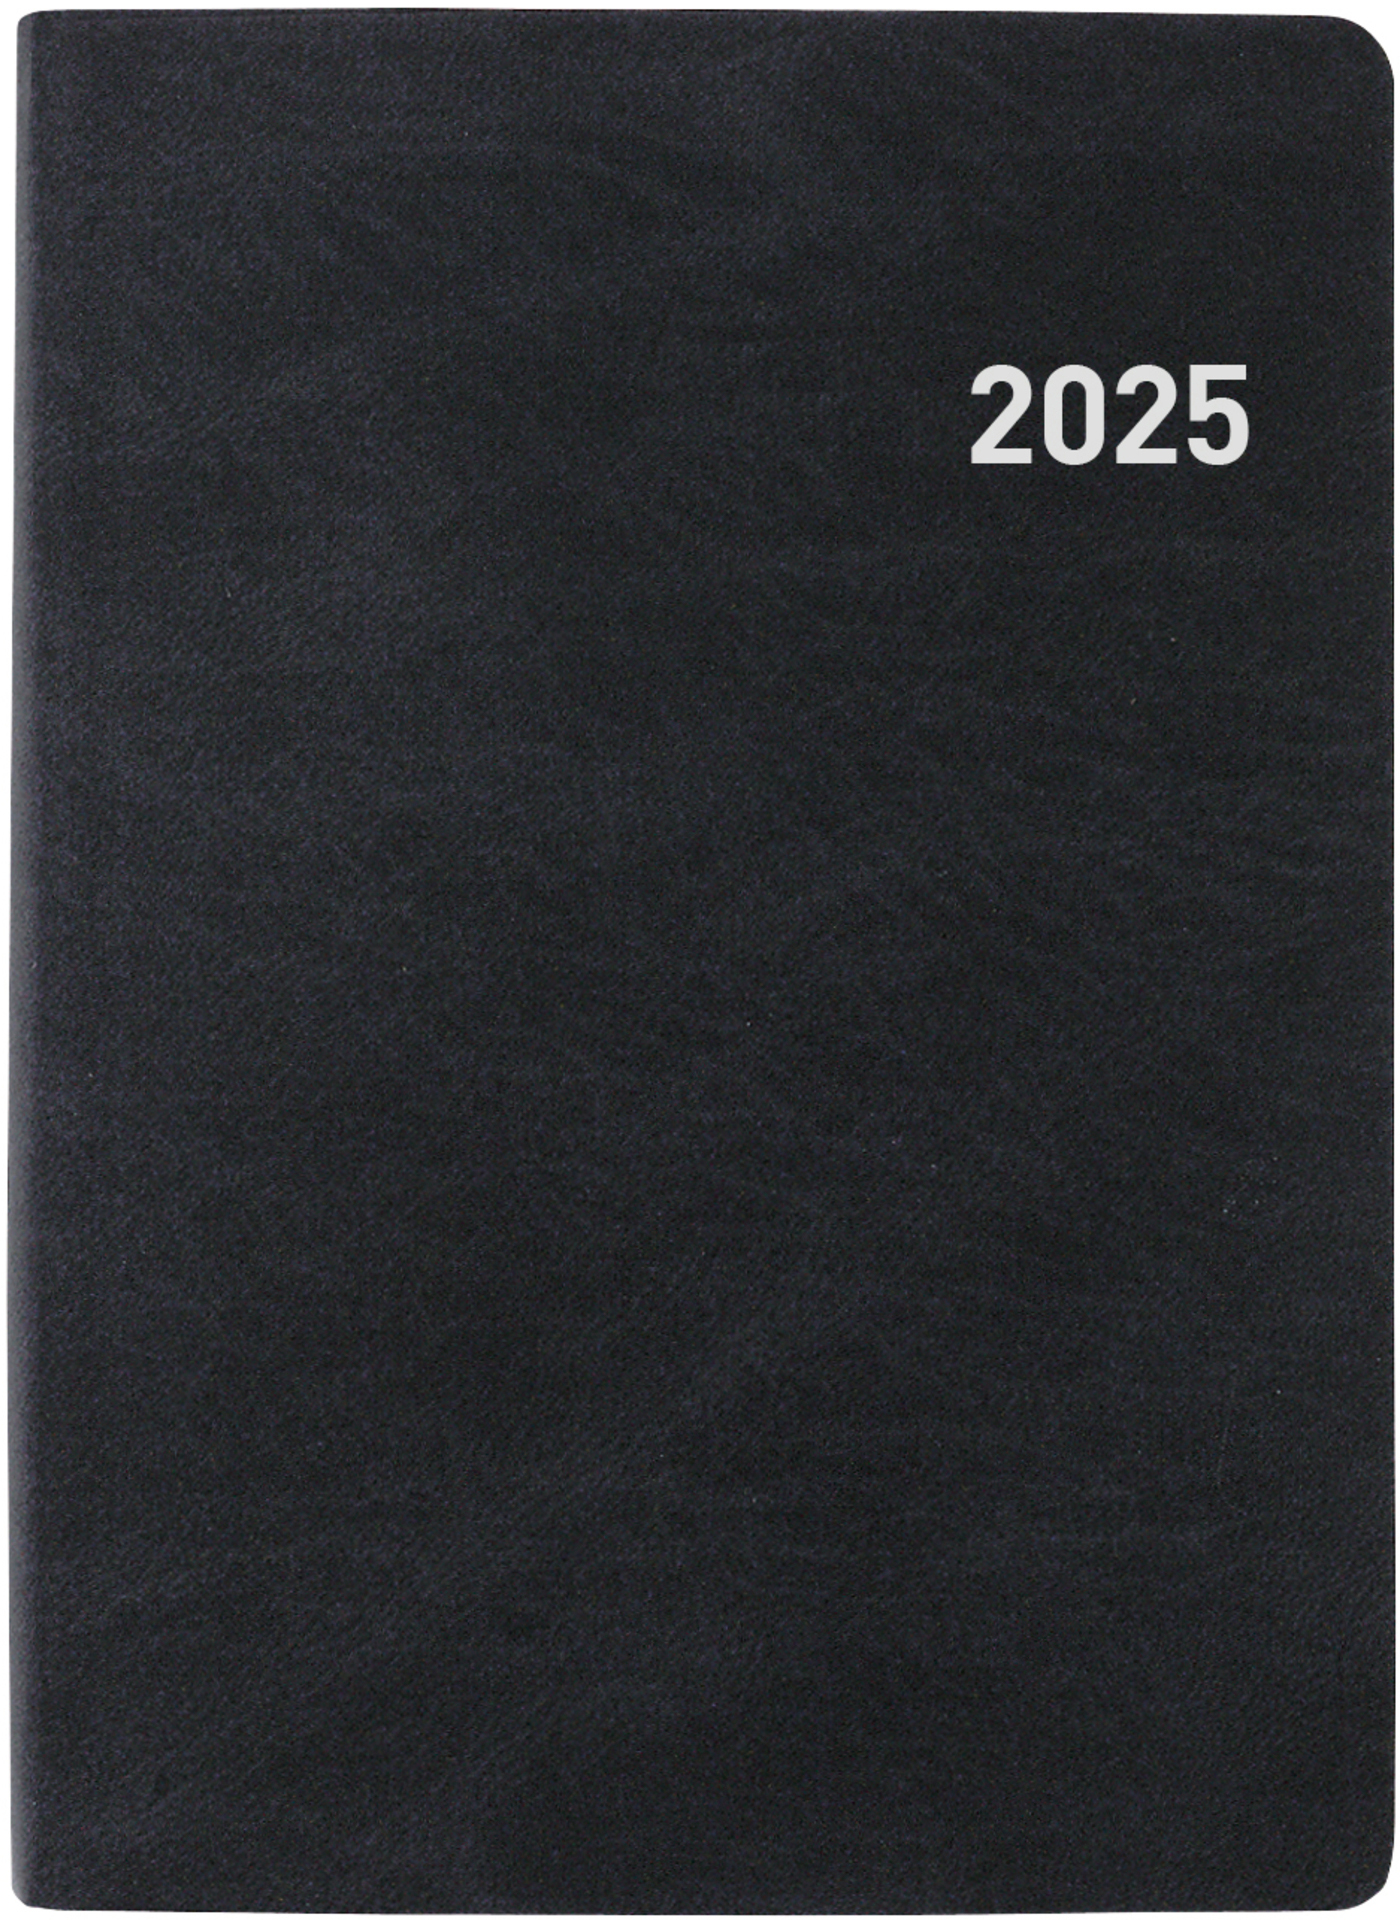 BIELLA Agenda Rex 2025 825301020025 1S/2P noir ML 10.1x14.2cm